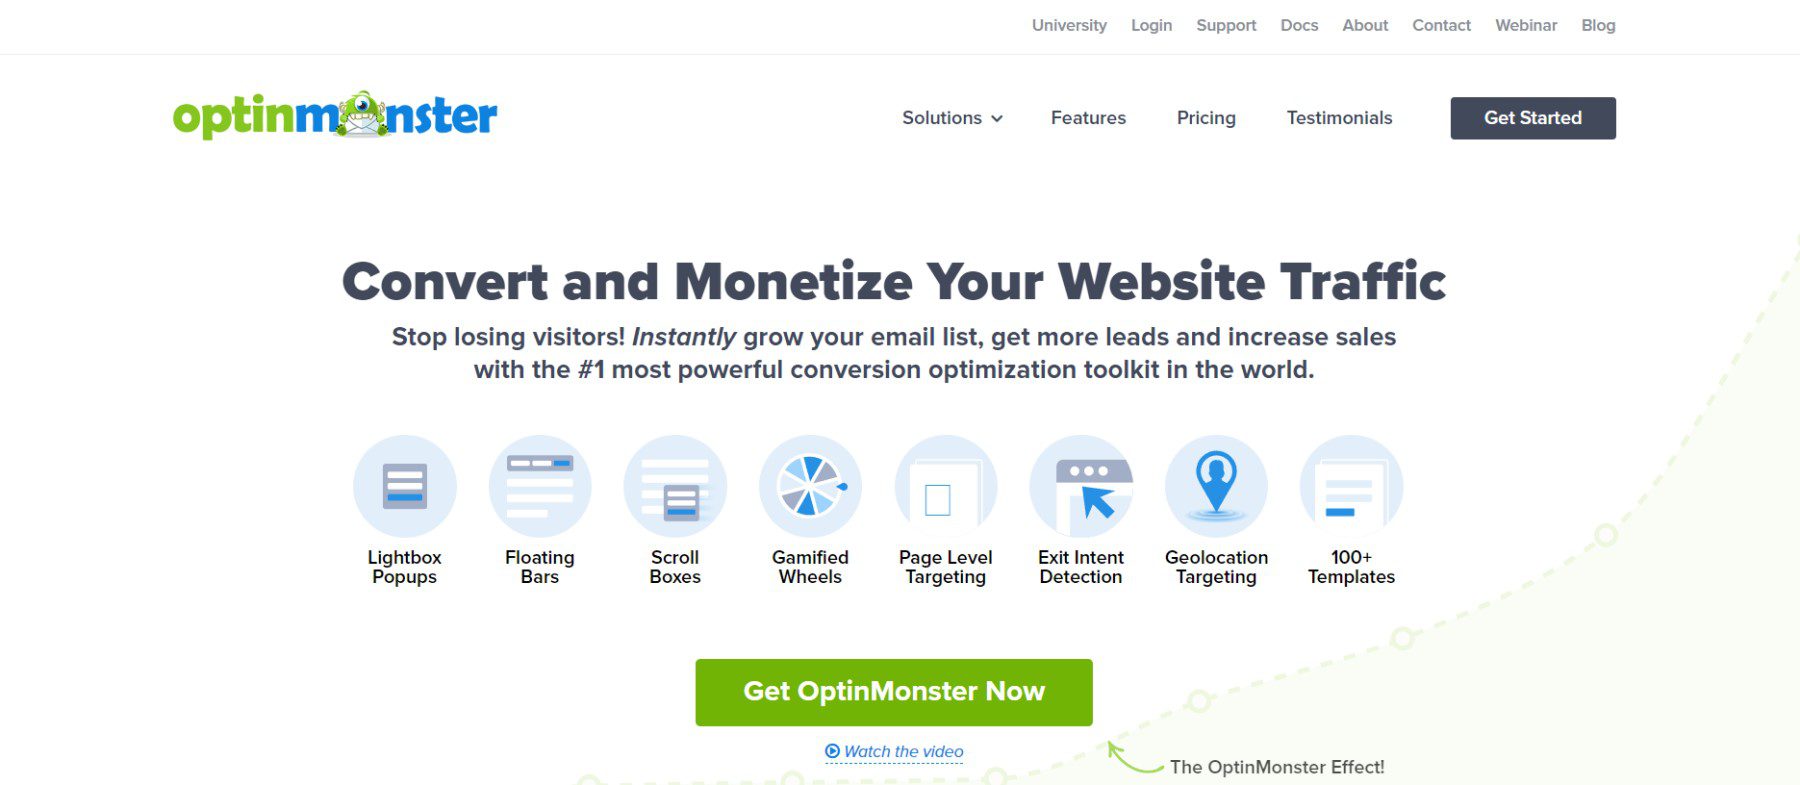 OptinMonster WordPress Marketing Plugin